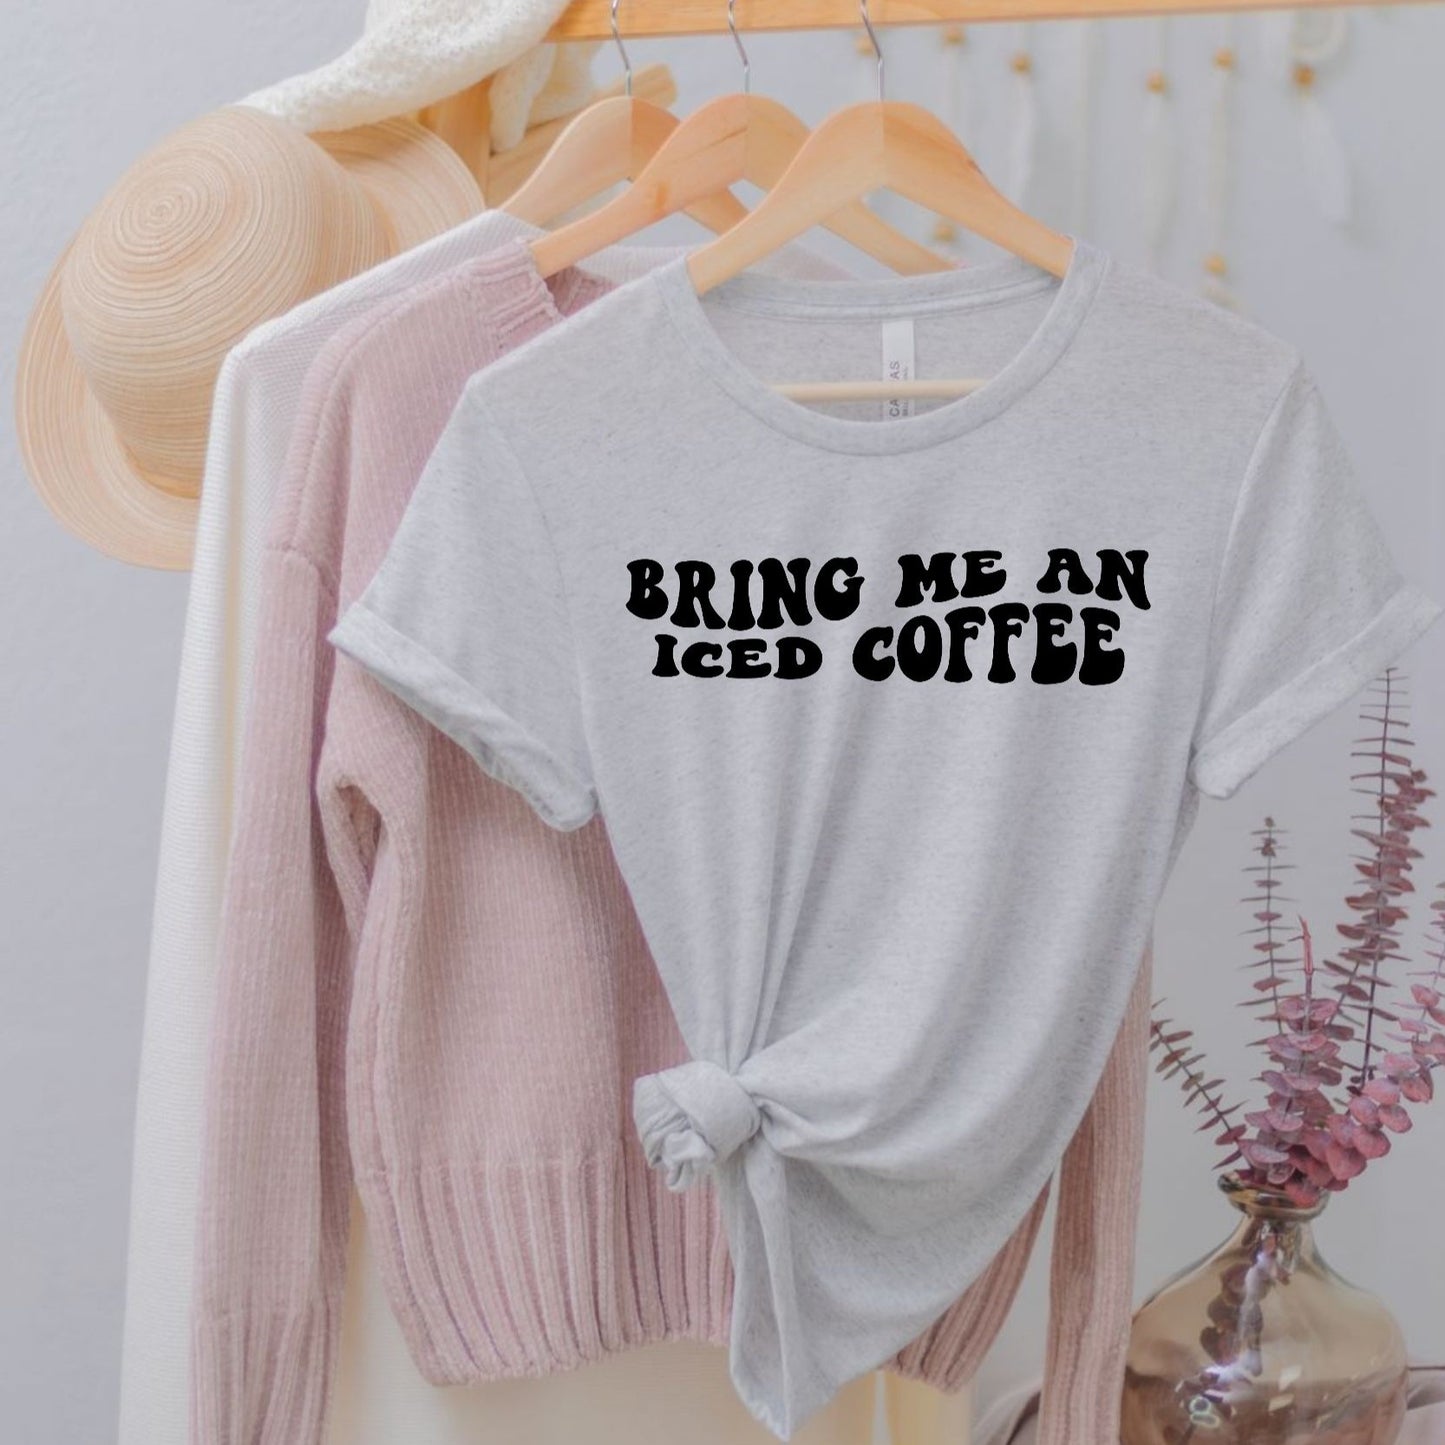 Bring Me an Iced Coffee